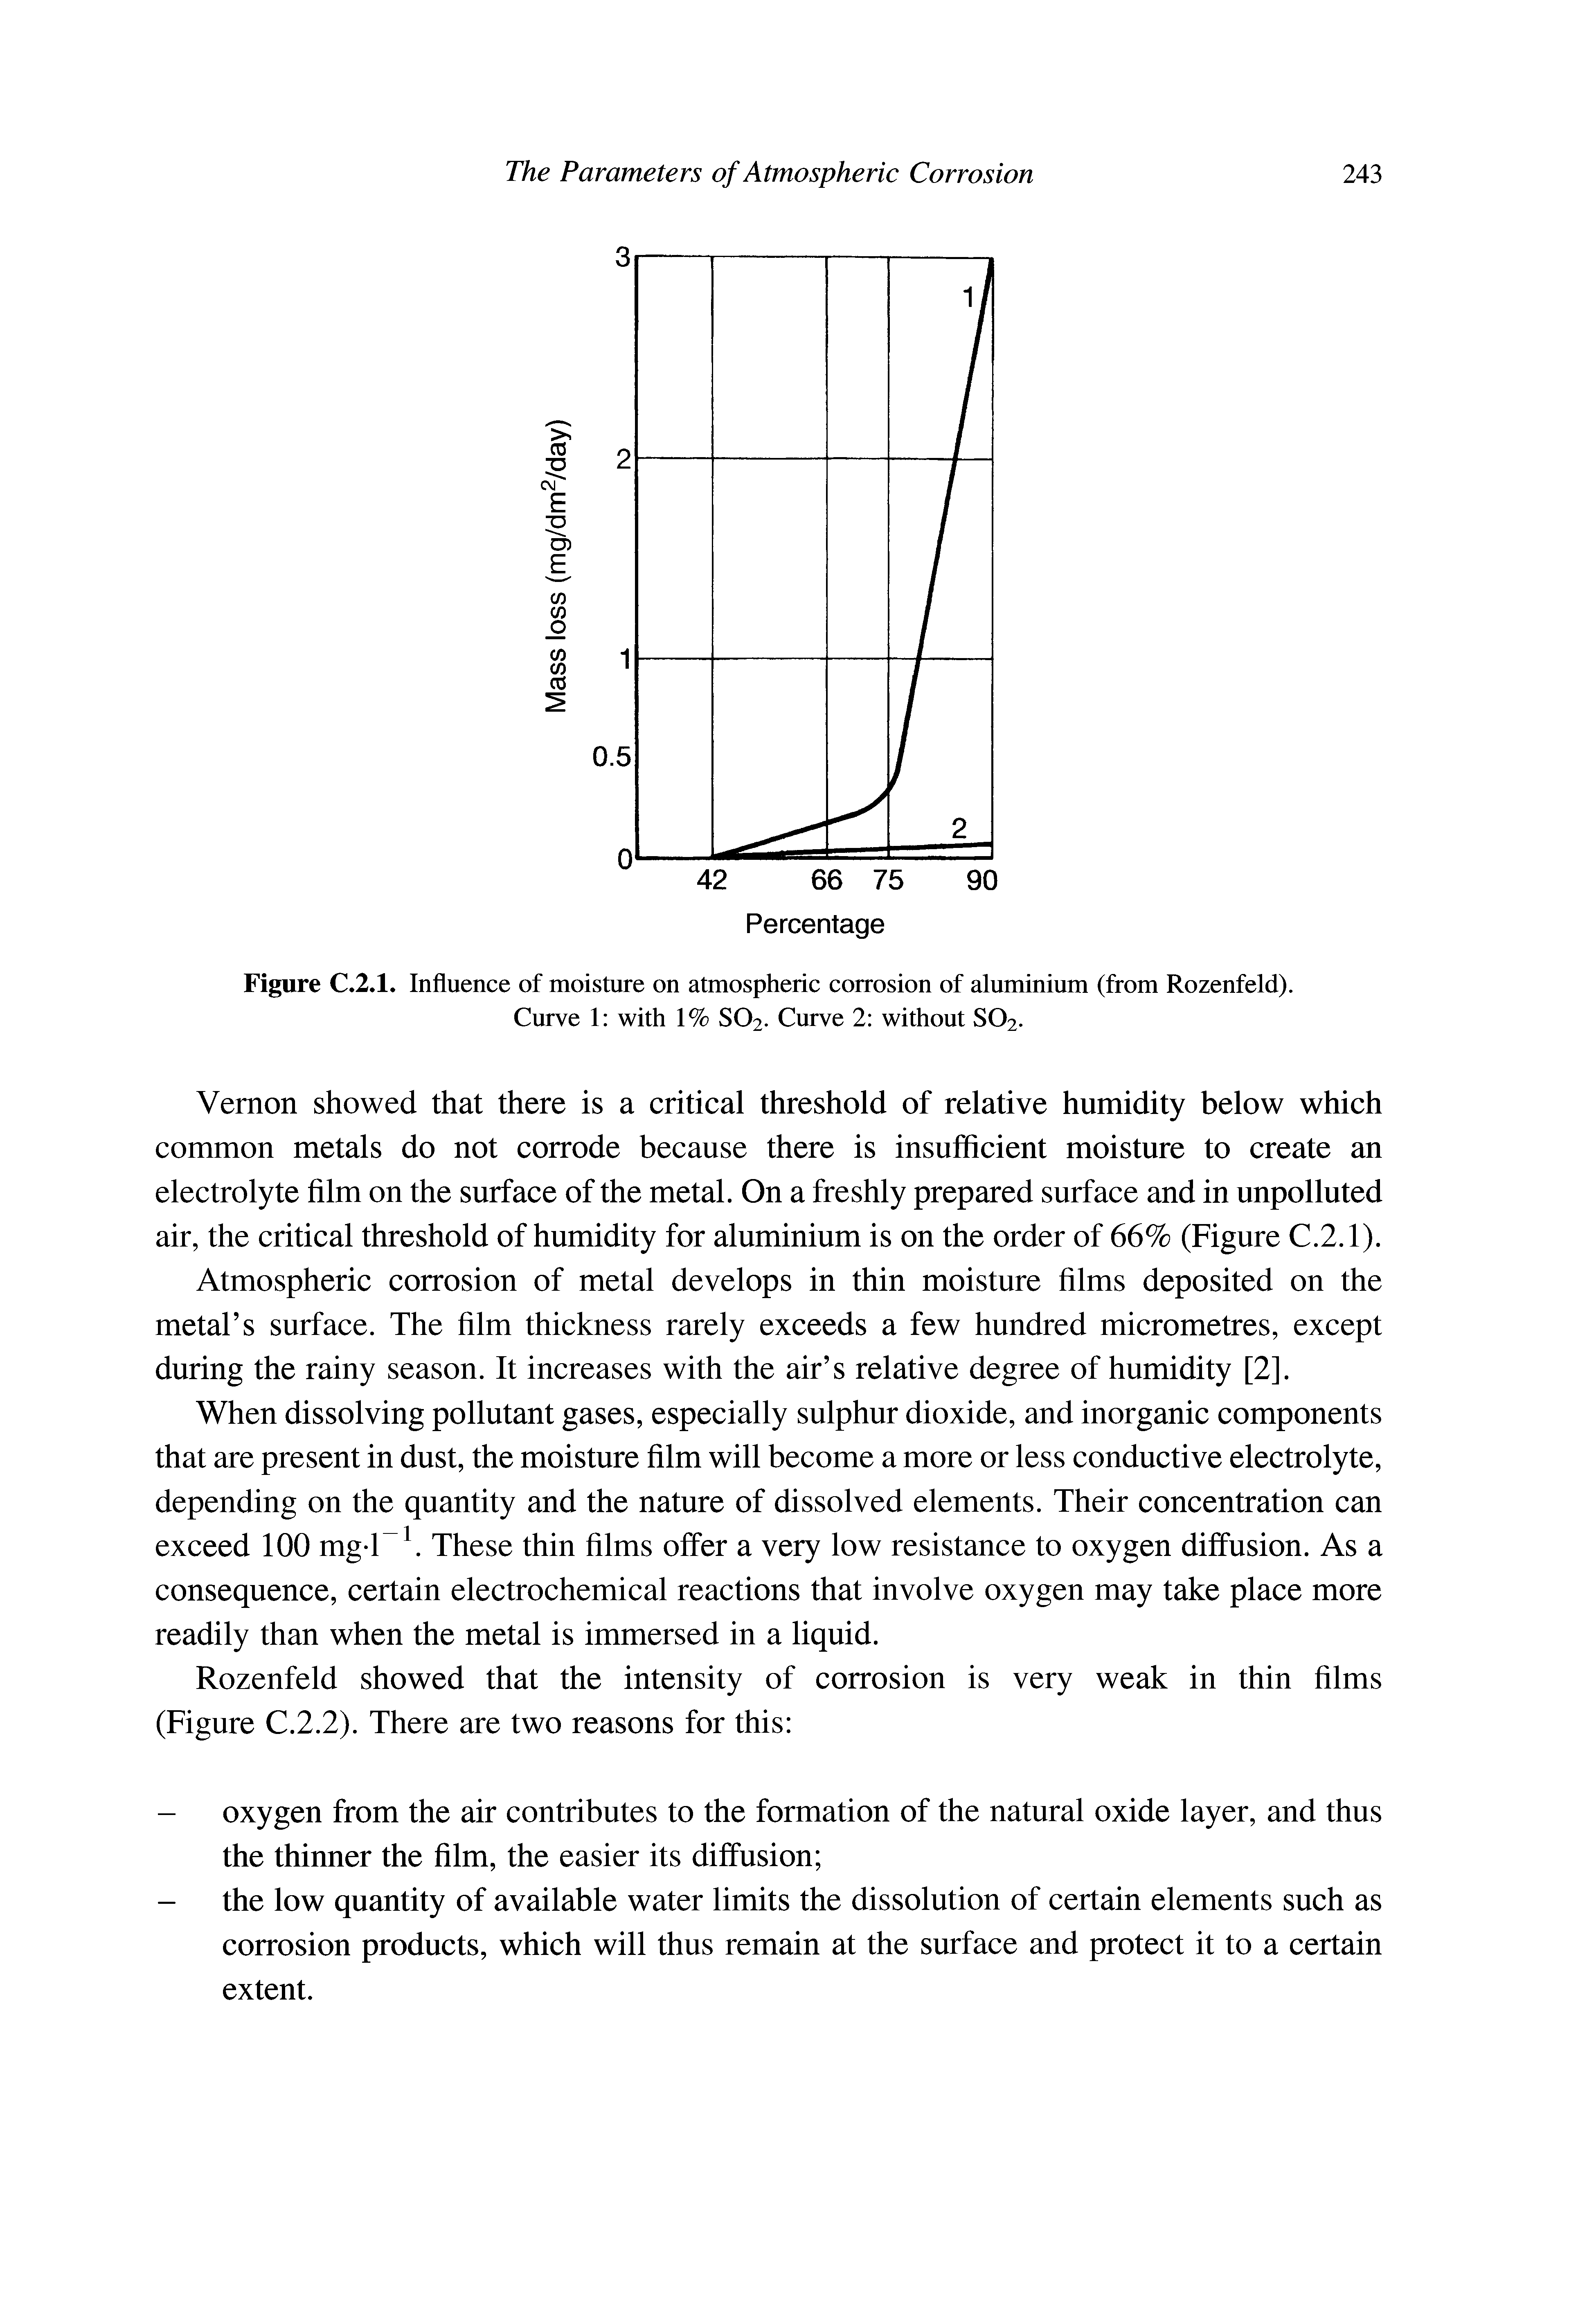 Figure C.2.1. Influence of moisture on atmospheric corrosion of aluminium (from Rozenfeld).